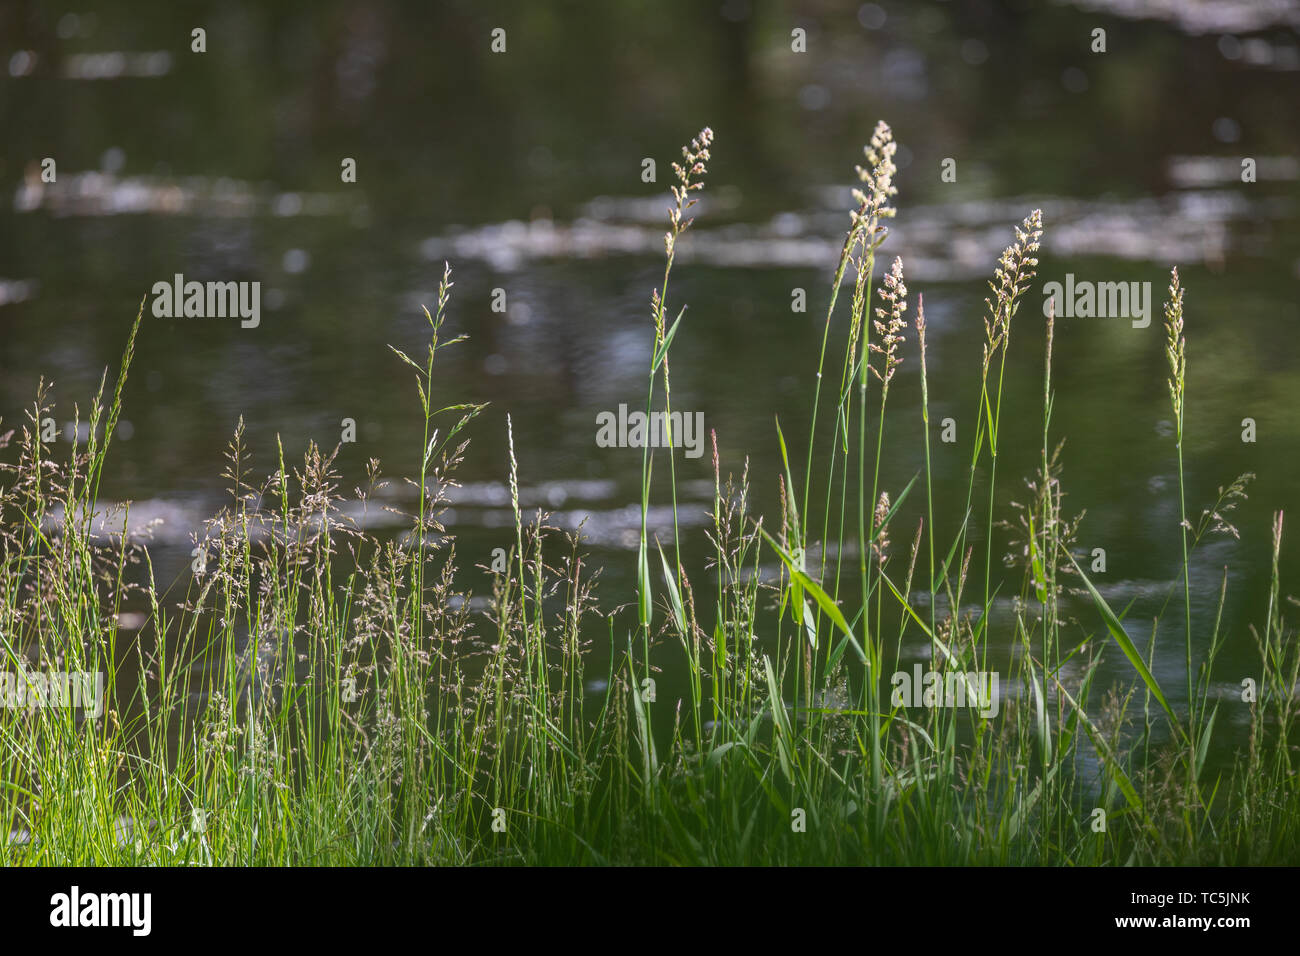 Grass by a lake Stock Photo